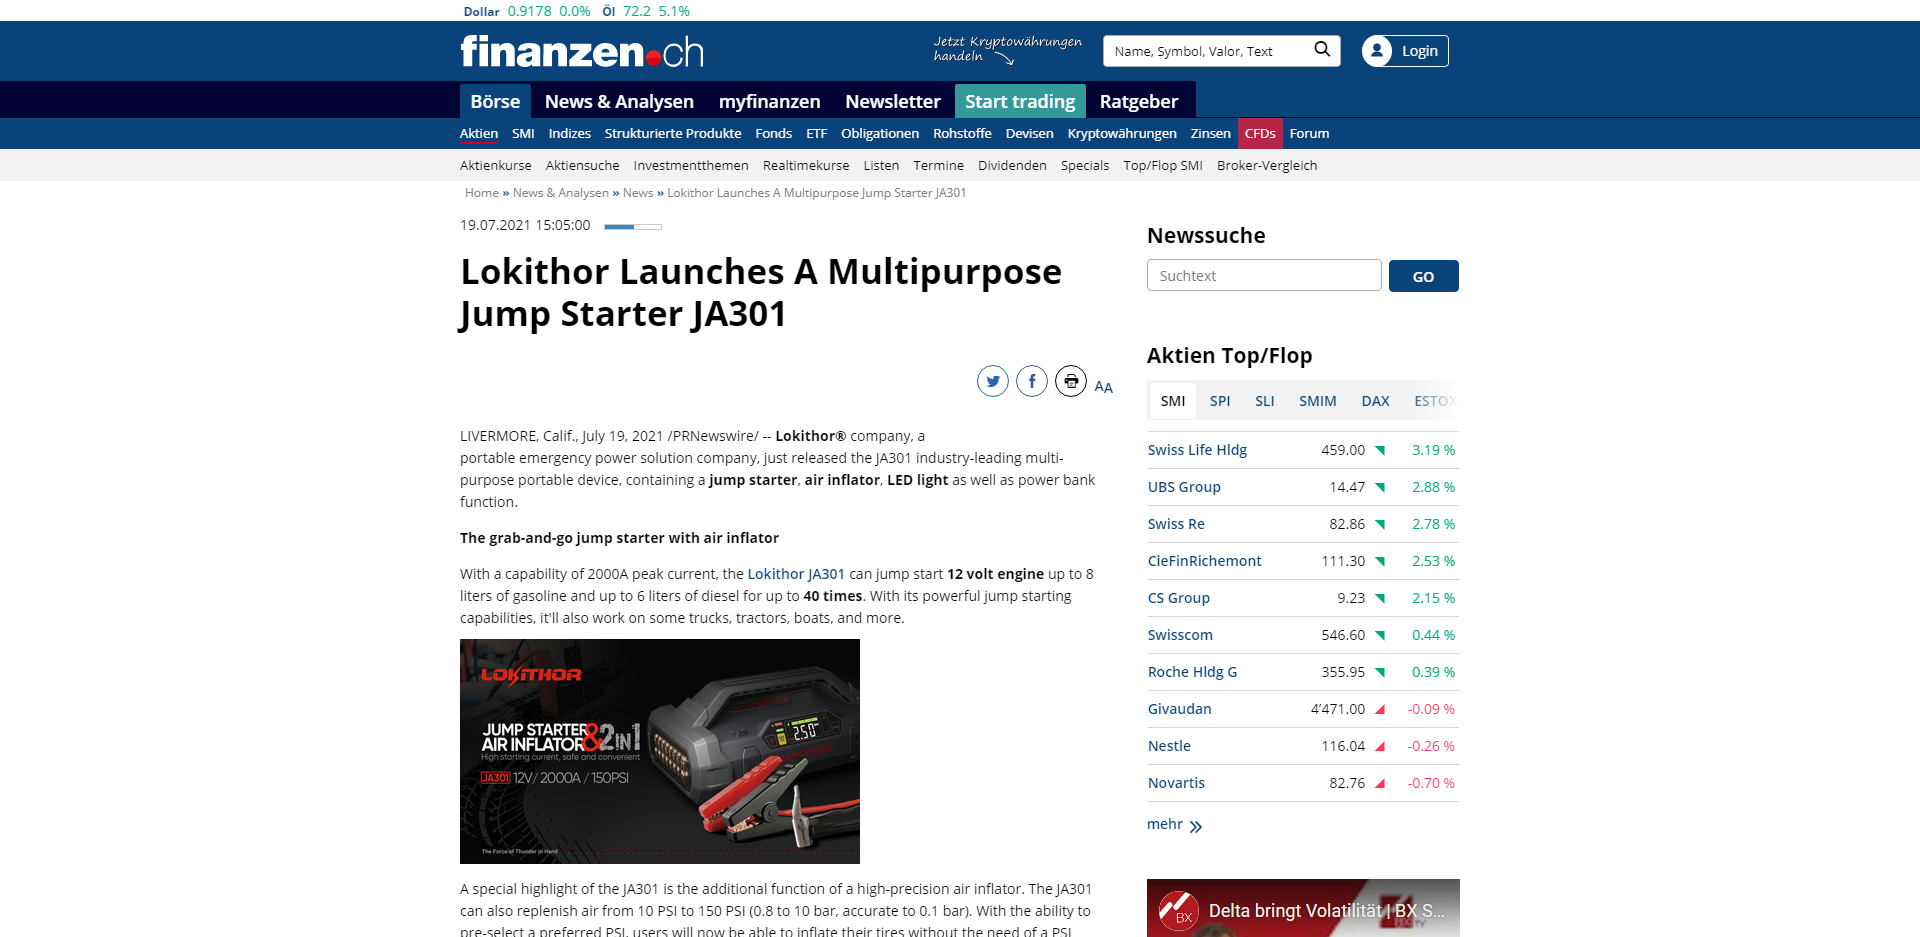 Lokithor Launches A Multipurpose Jump Starter JA301 - www.finanzen.ch